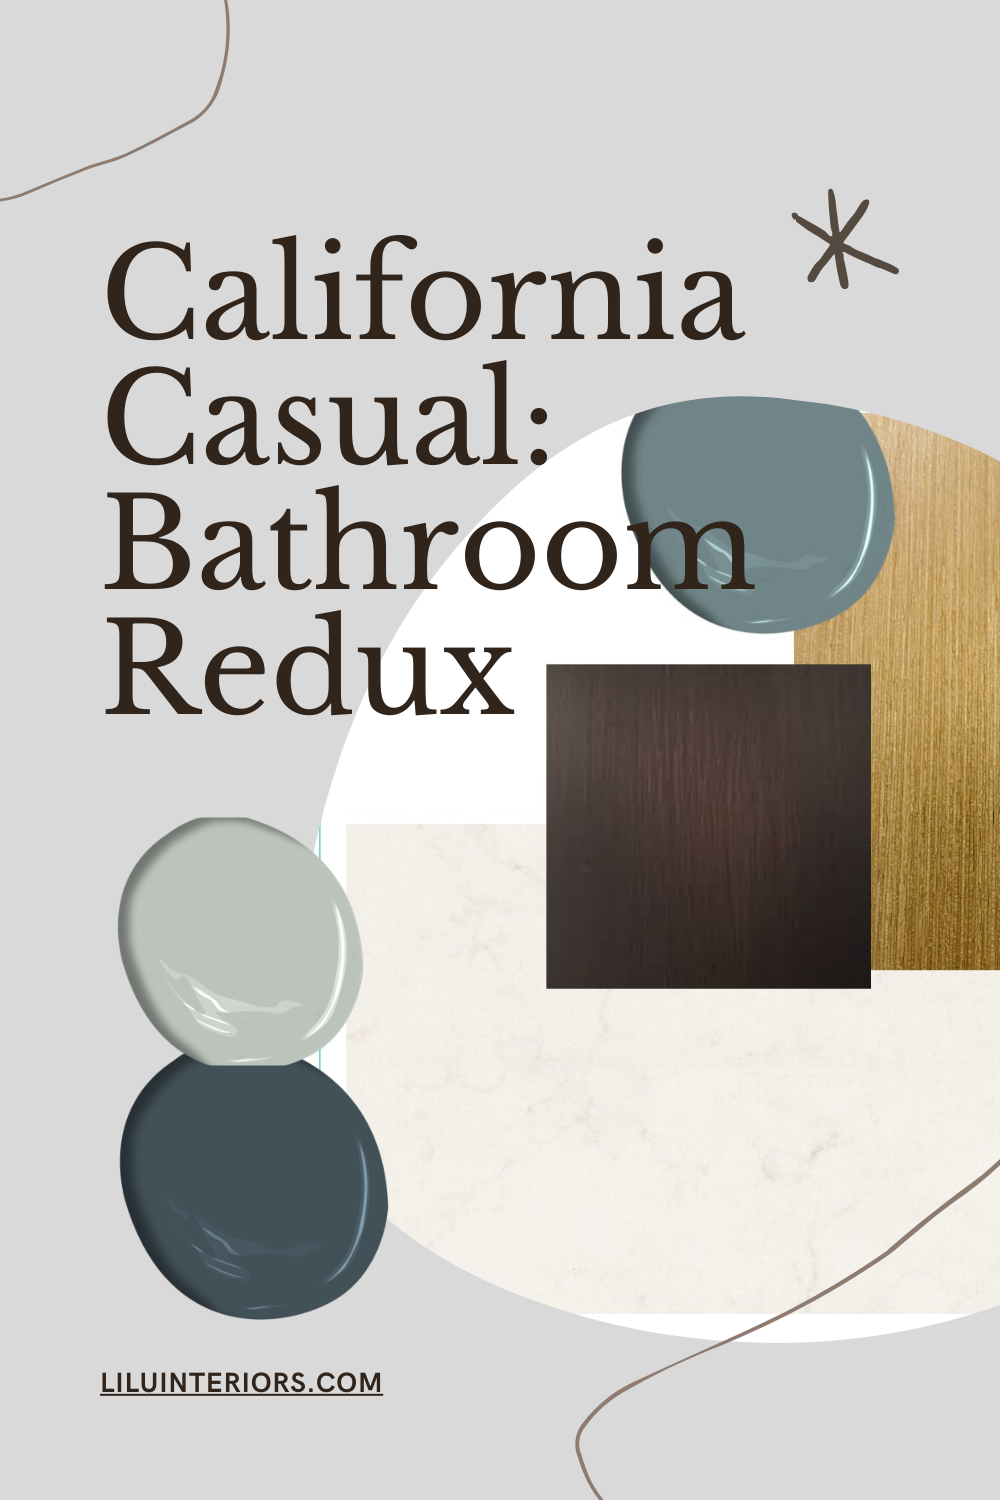 California Casual Bathroom Redux